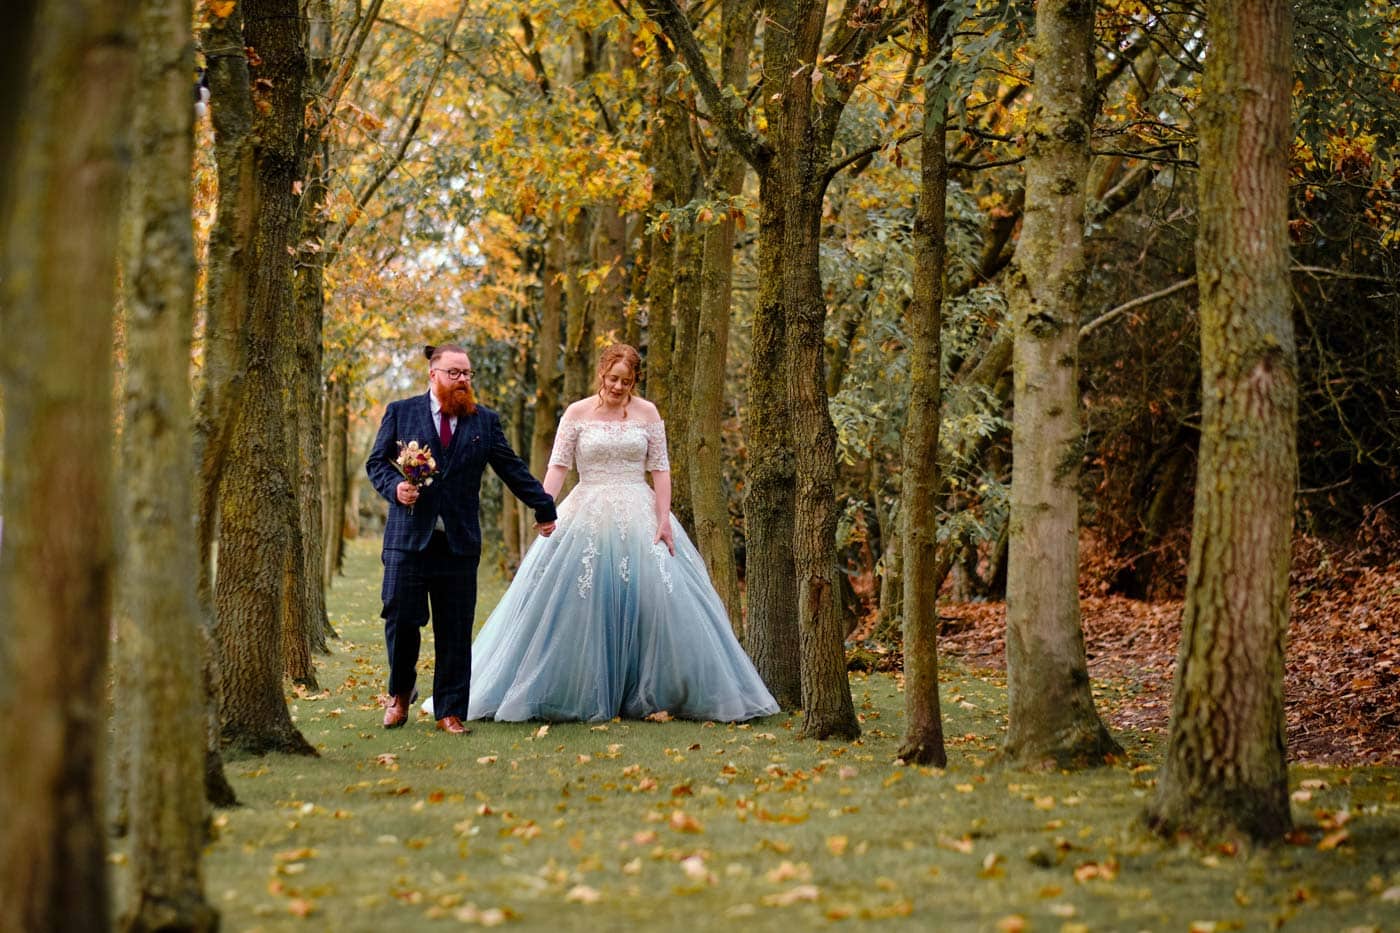 Bride and groom walking in grounds of Shustoke Barn by Shustoke Barn wedding photographer Clive Blair